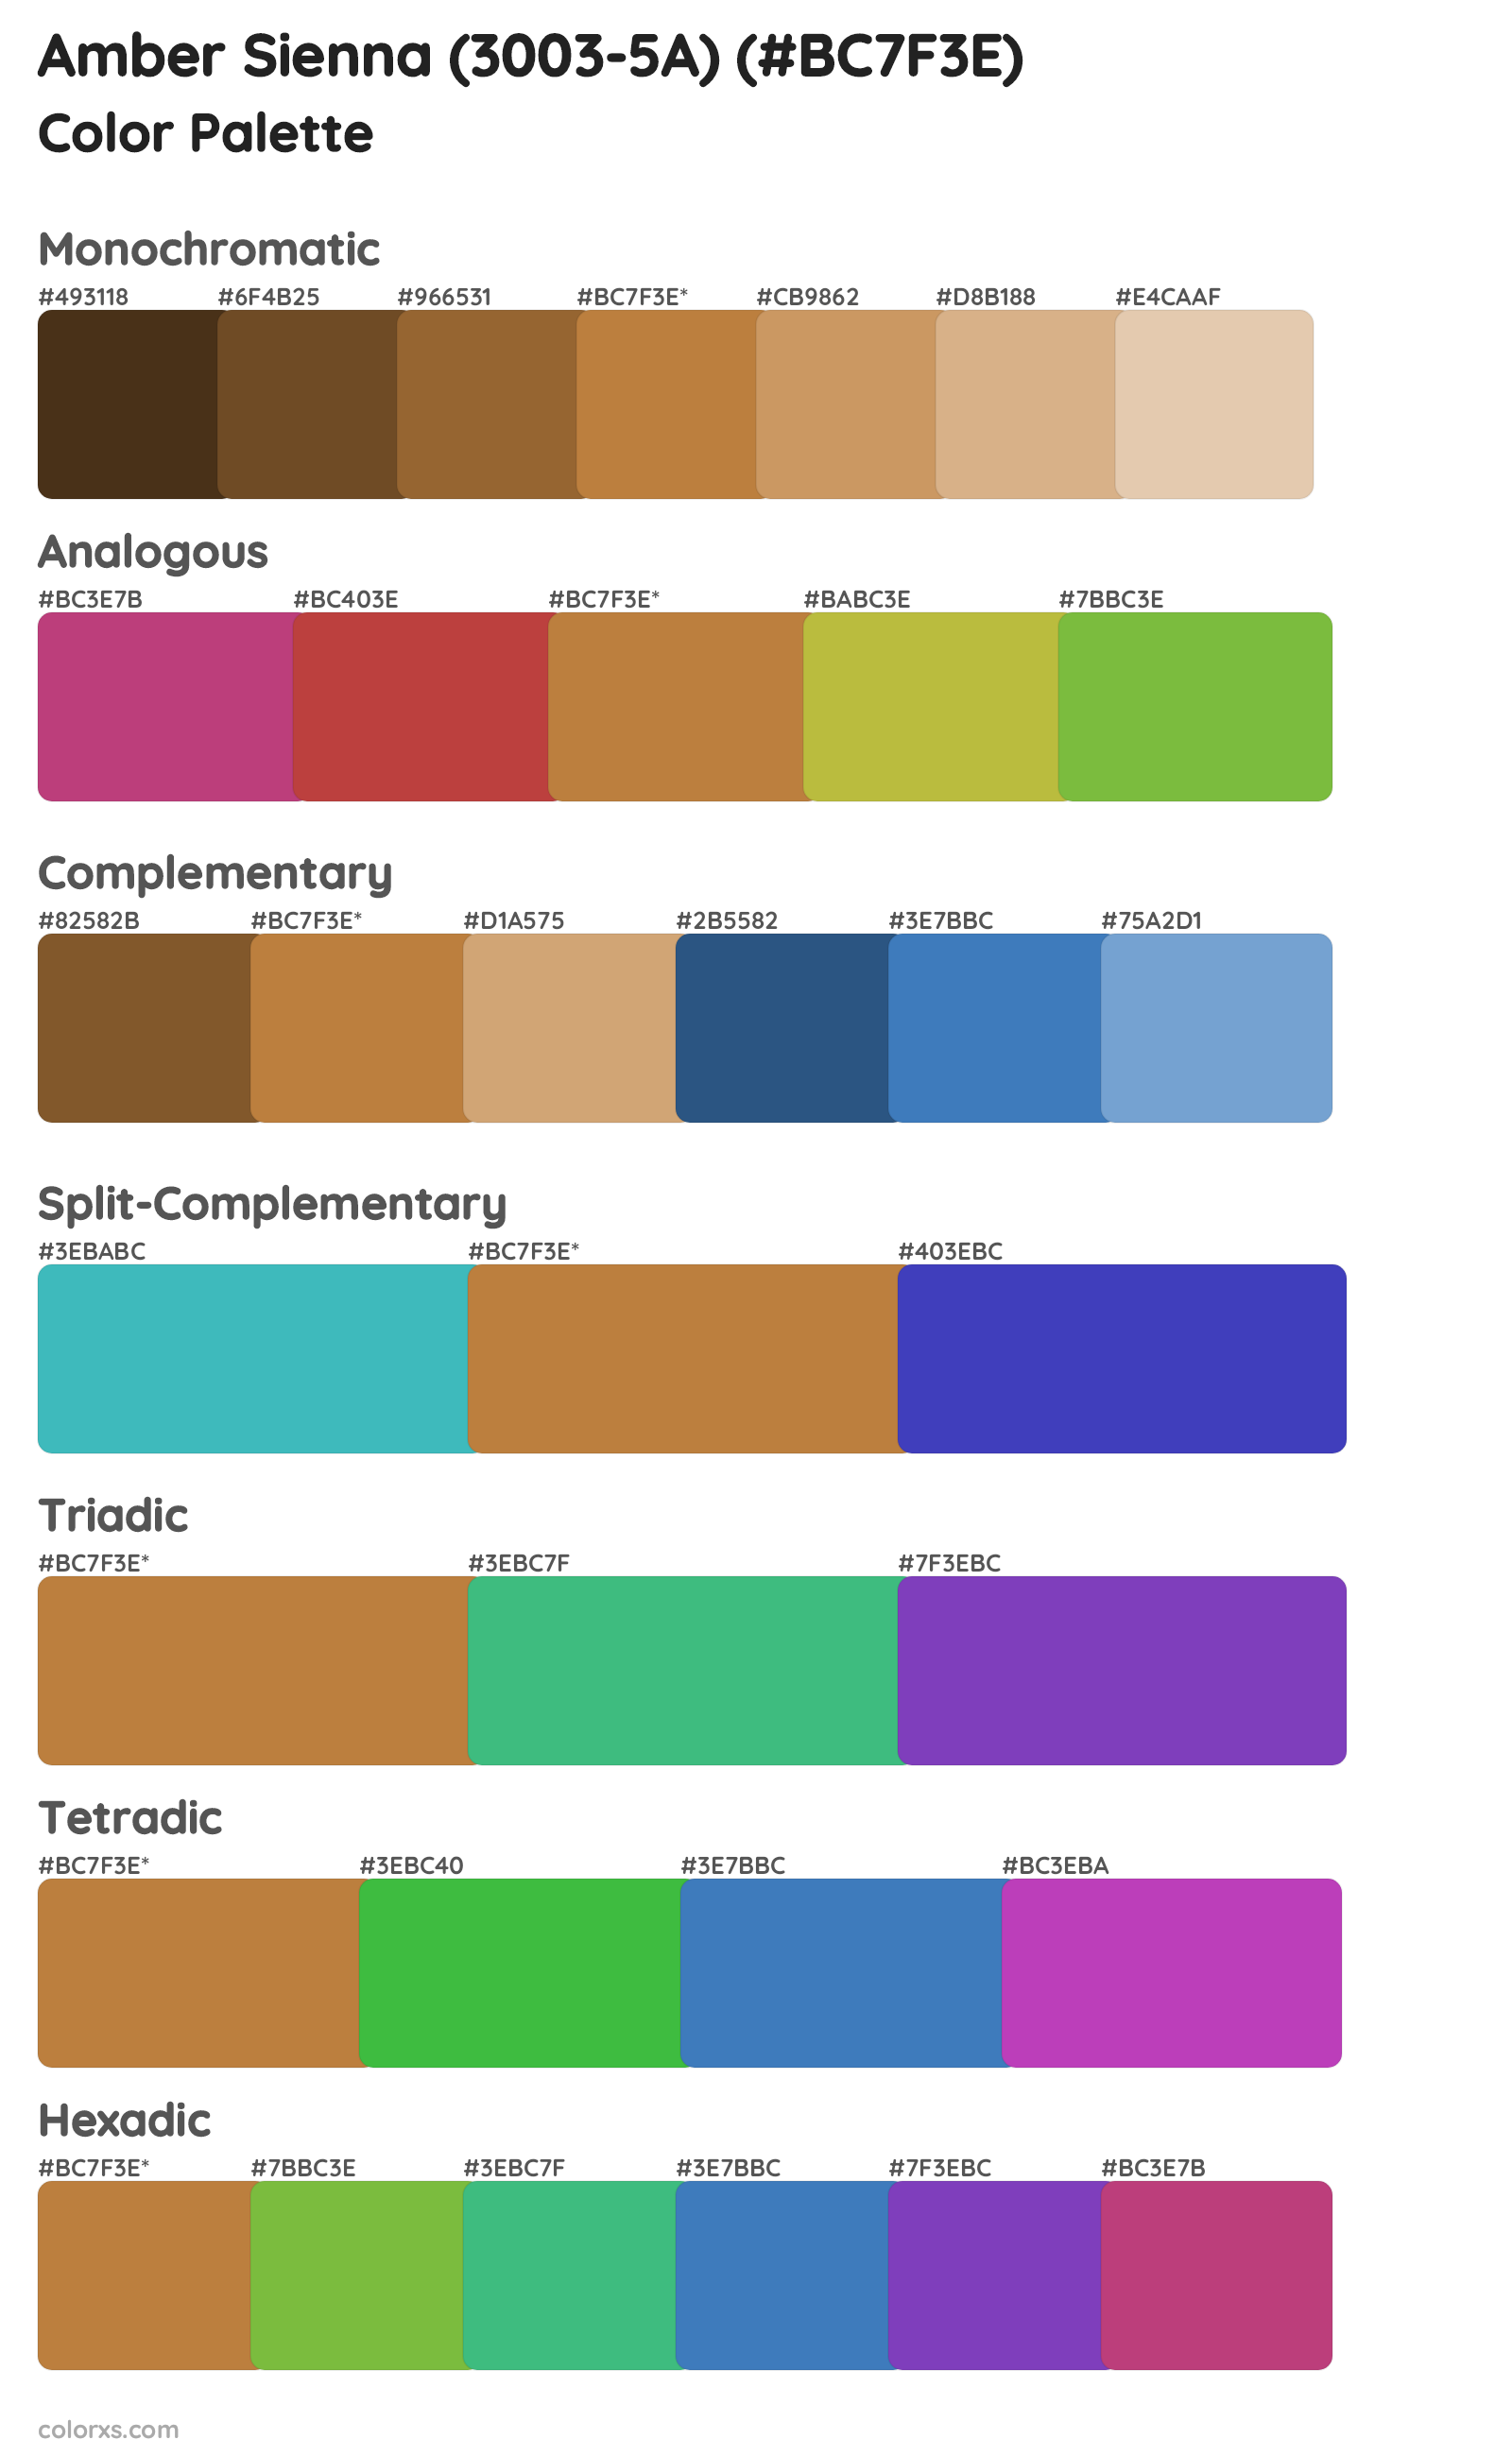 Amber Sienna (3003-5A) Color Scheme Palettes